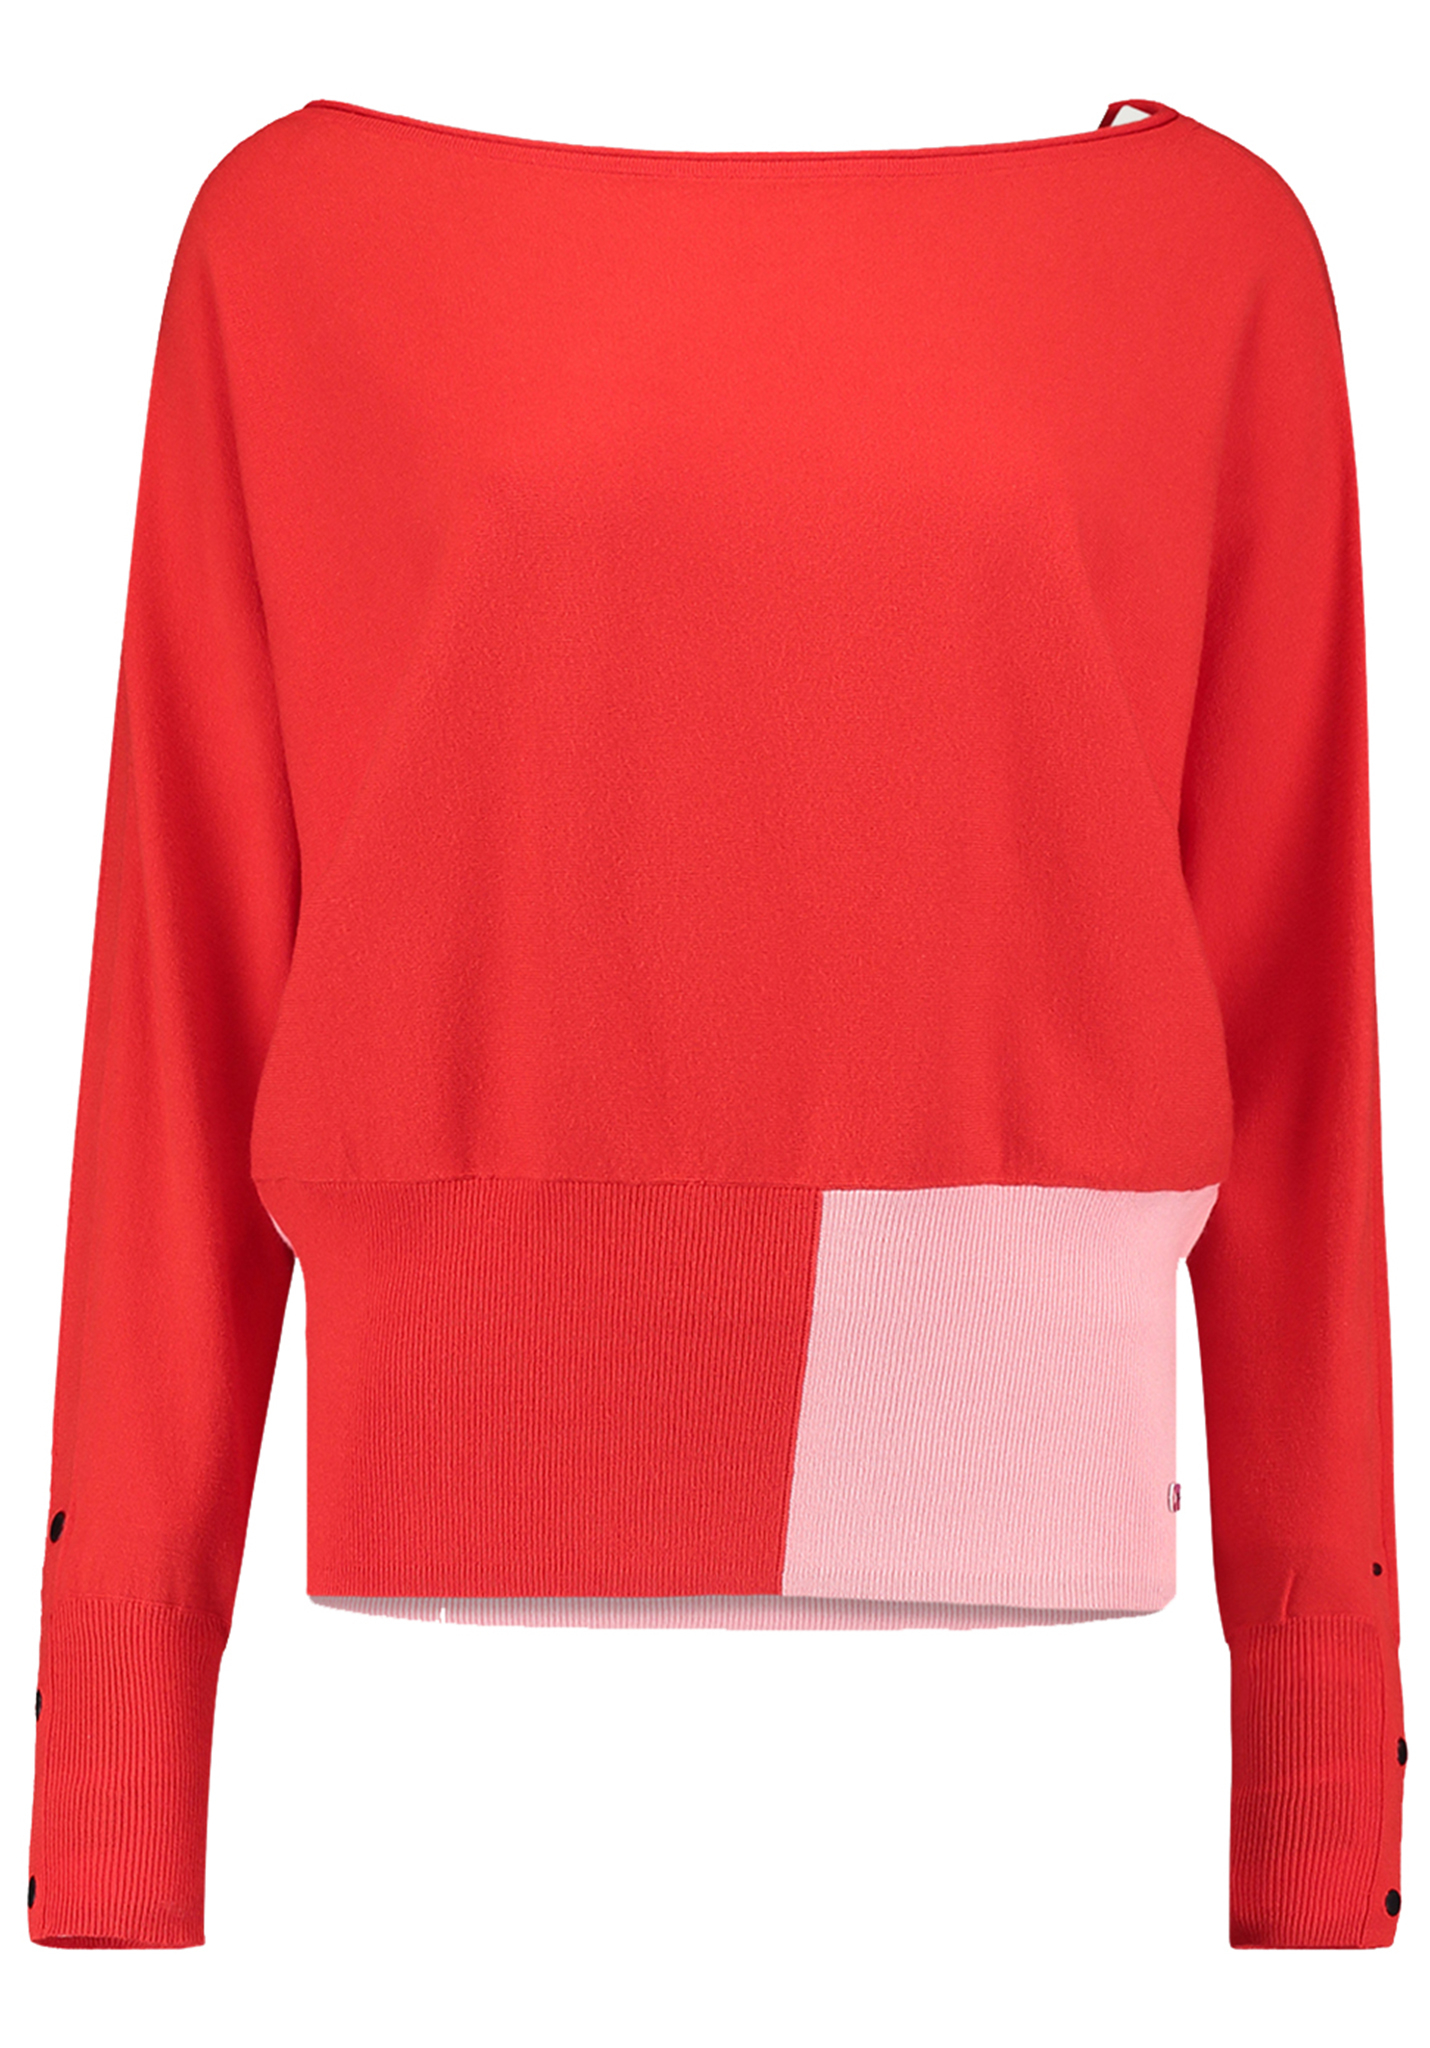 O'Neill Kniter Sweatshirts red XL